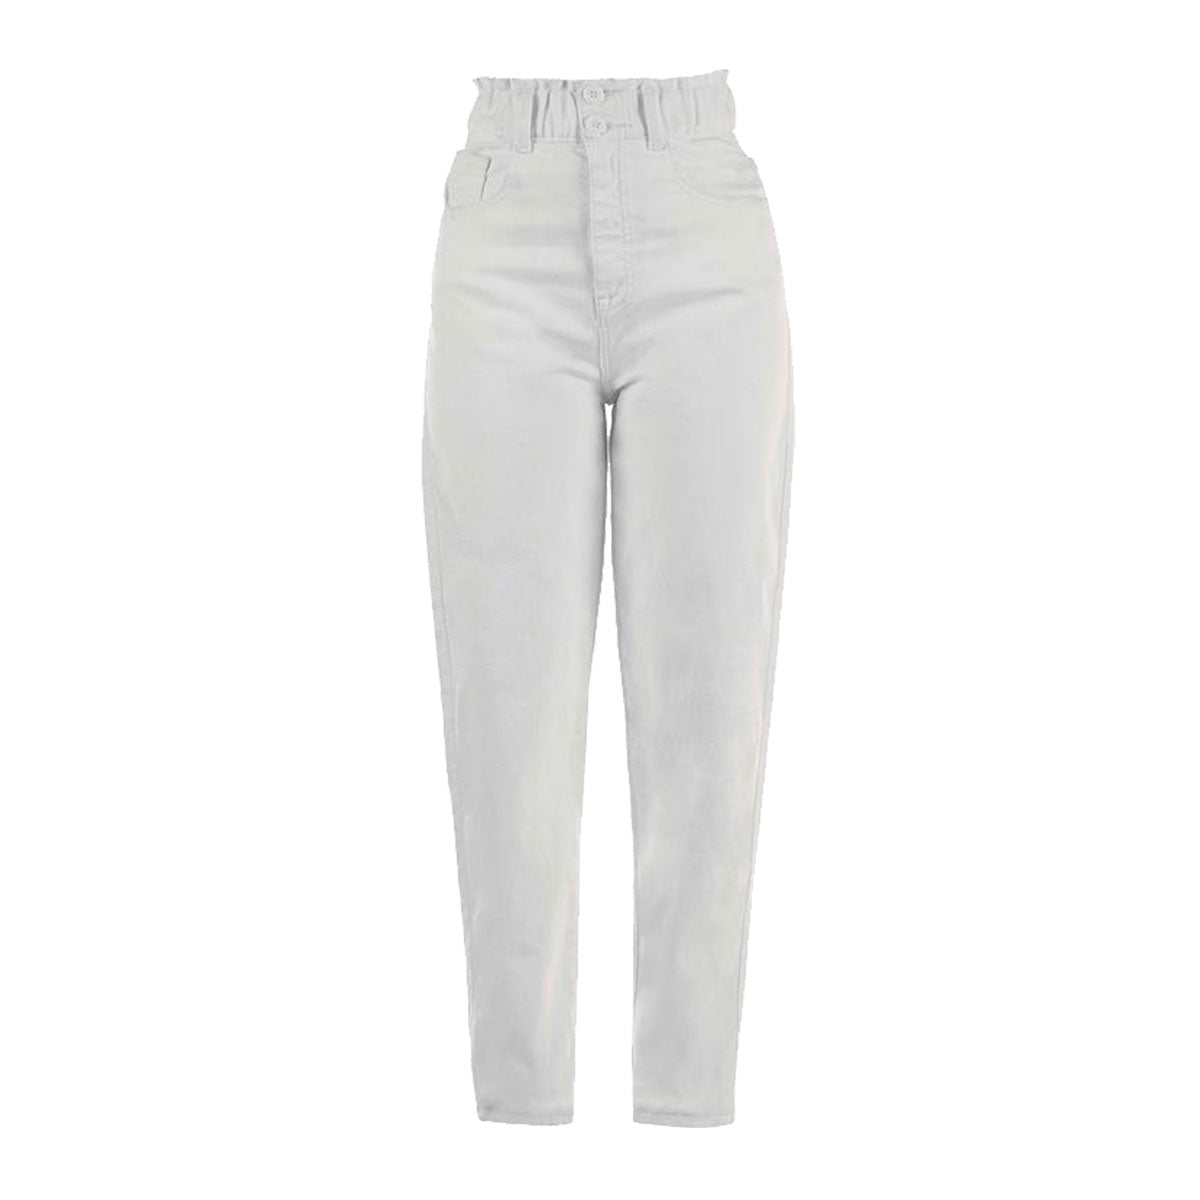 Jeans de Mezclilla Para Mujer TREVO 967-07 Blanco